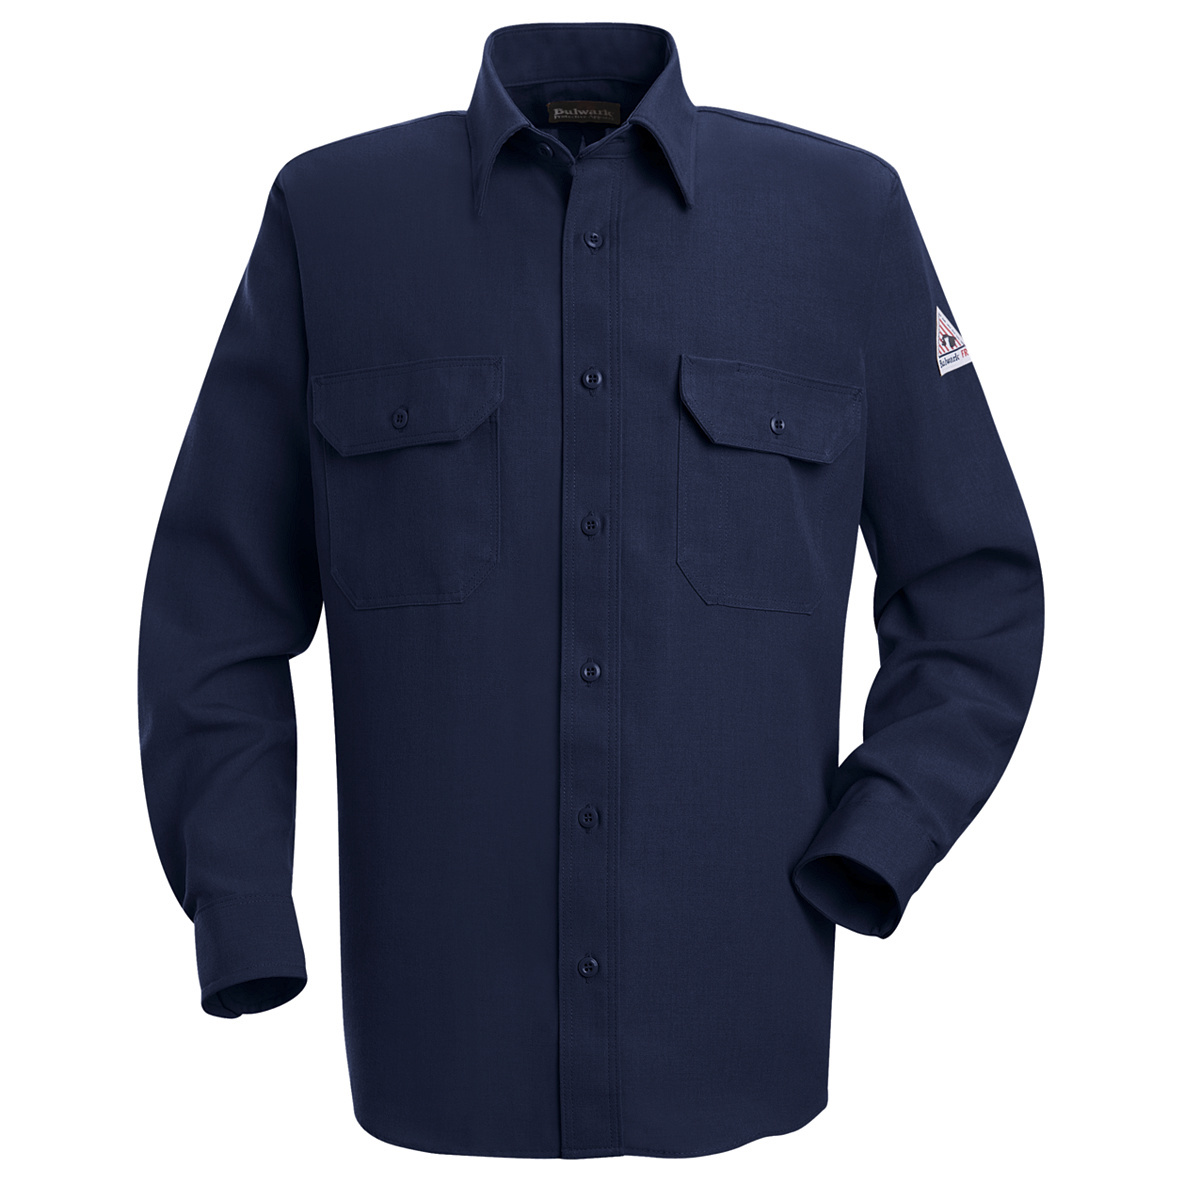 Bulwark® Large Tall Navy Blue Nomex® IIIA/Nomex® Aramid/Kevlar® Aramid Flame Resistant Uniform Shirt With Button Front Closure